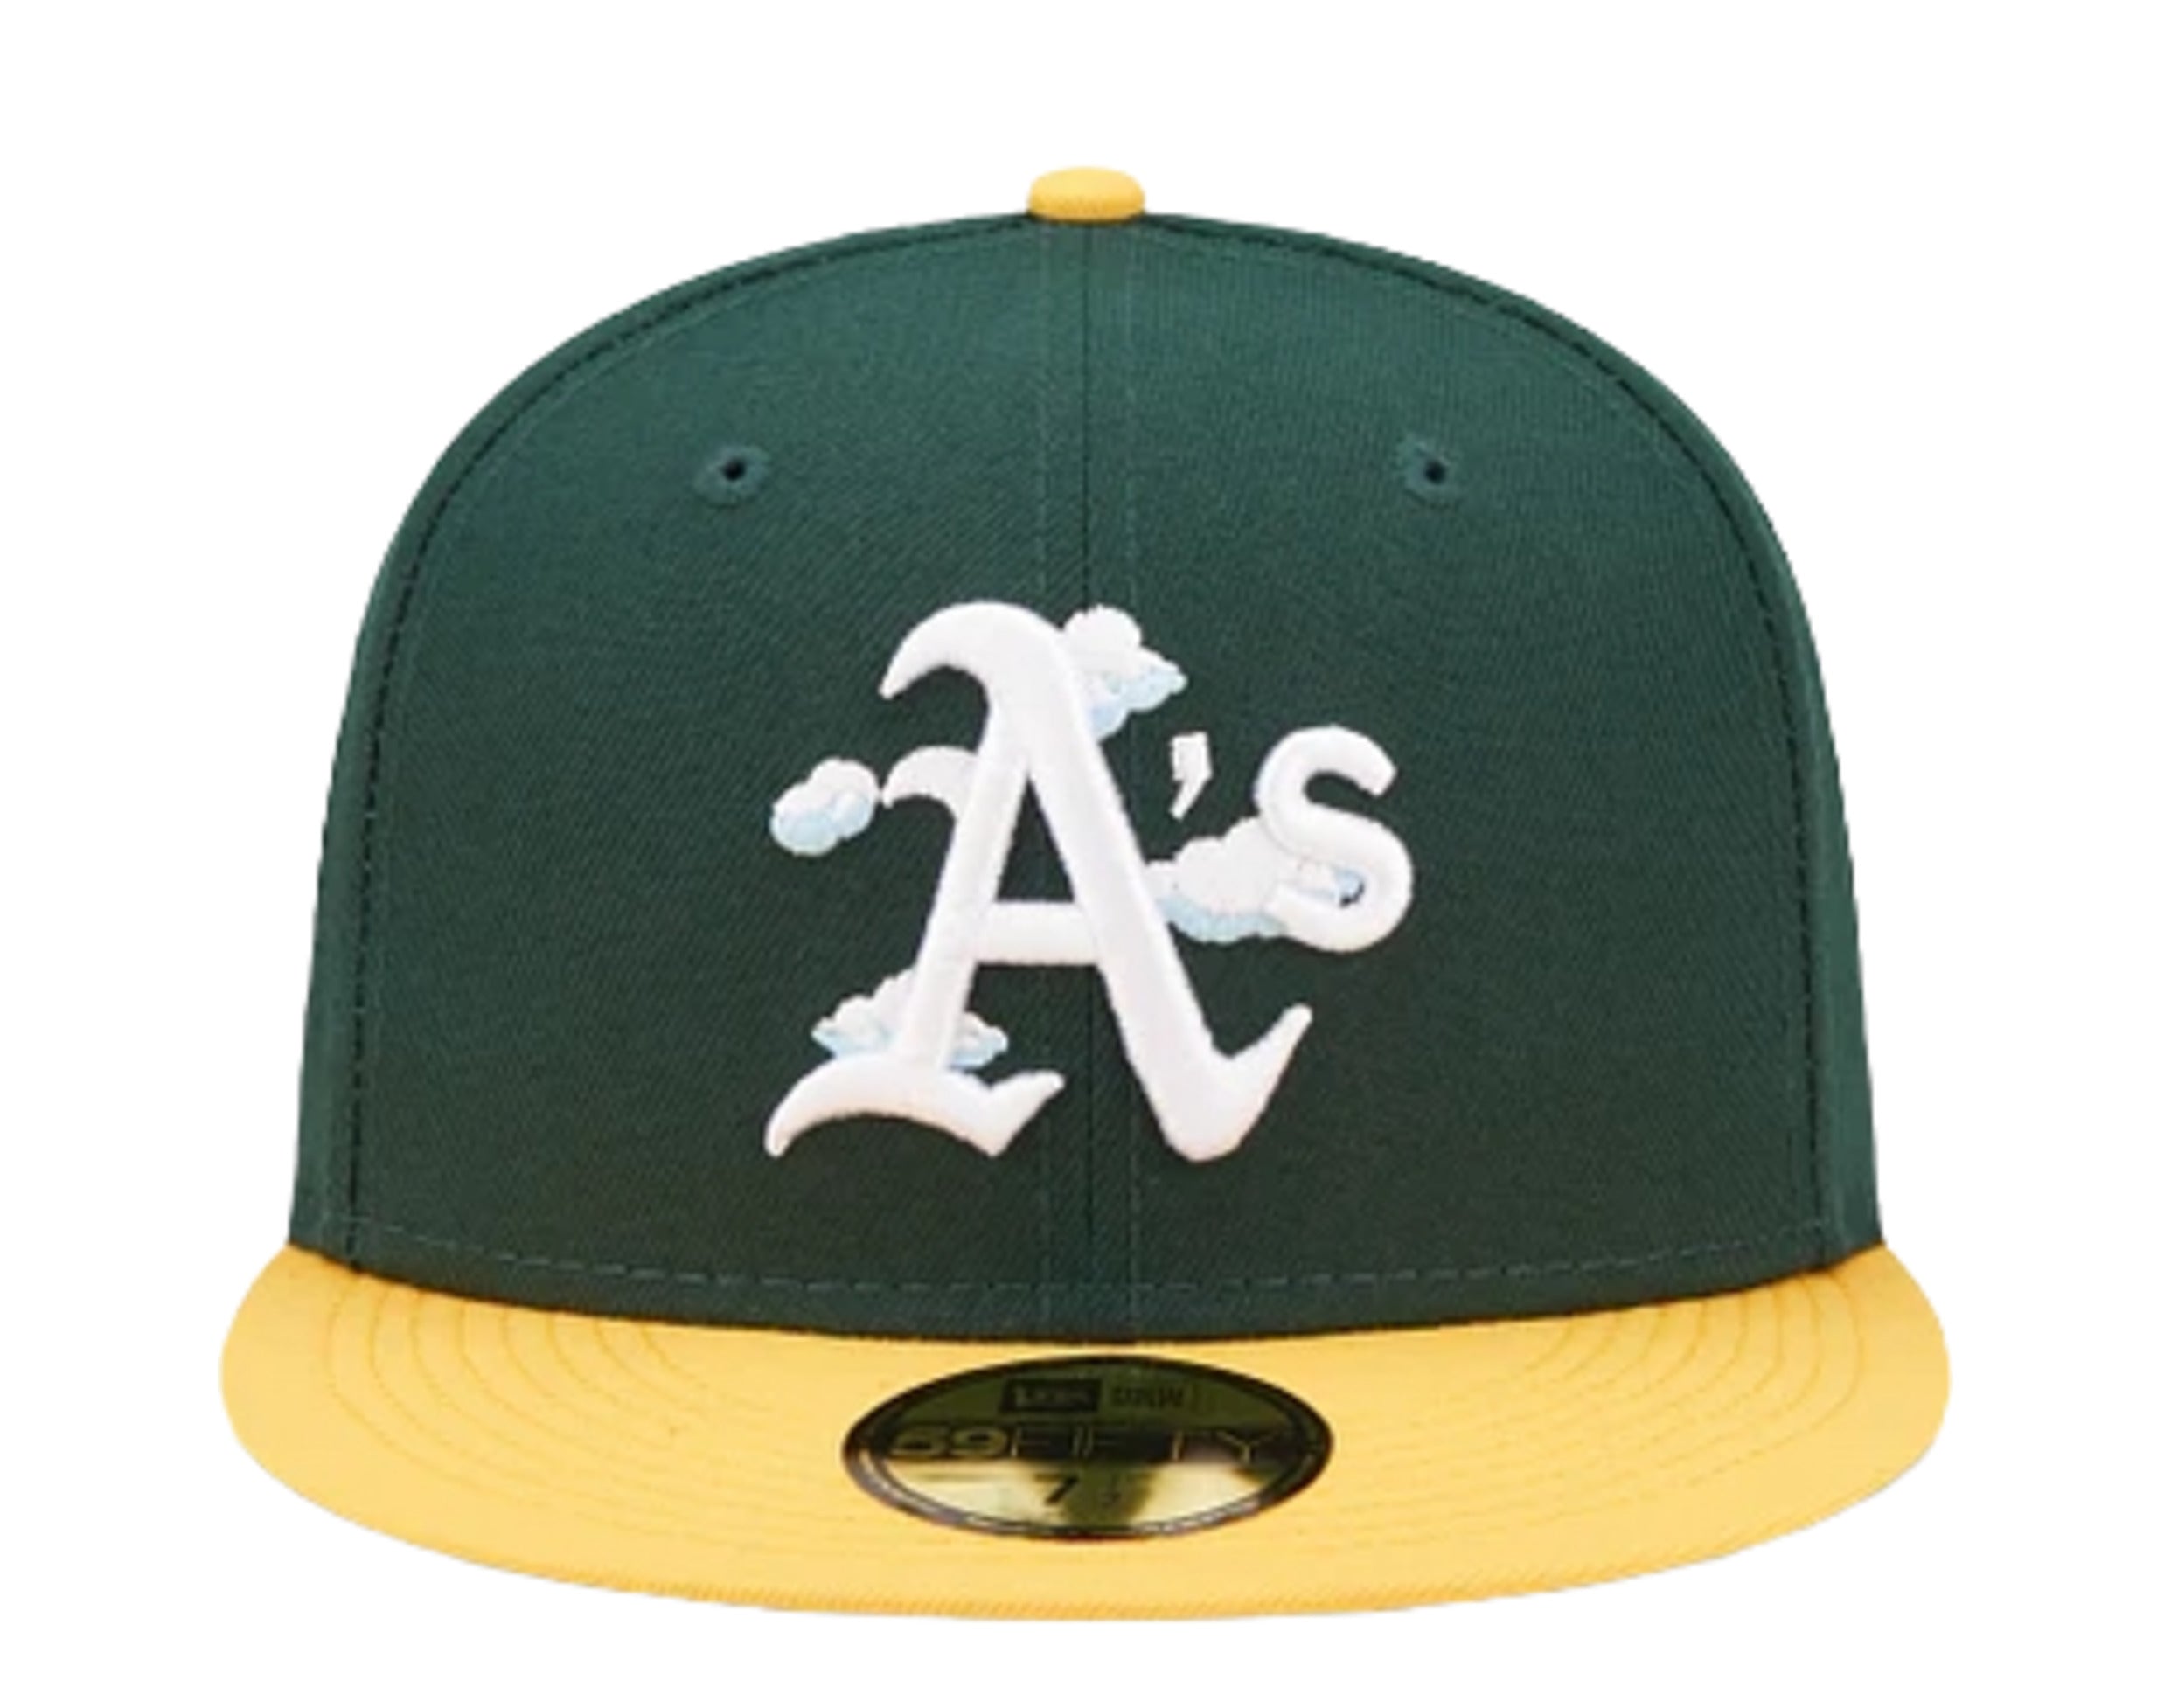 New Era Oakland Athletics Hats in Oakland Athletics Team Shop